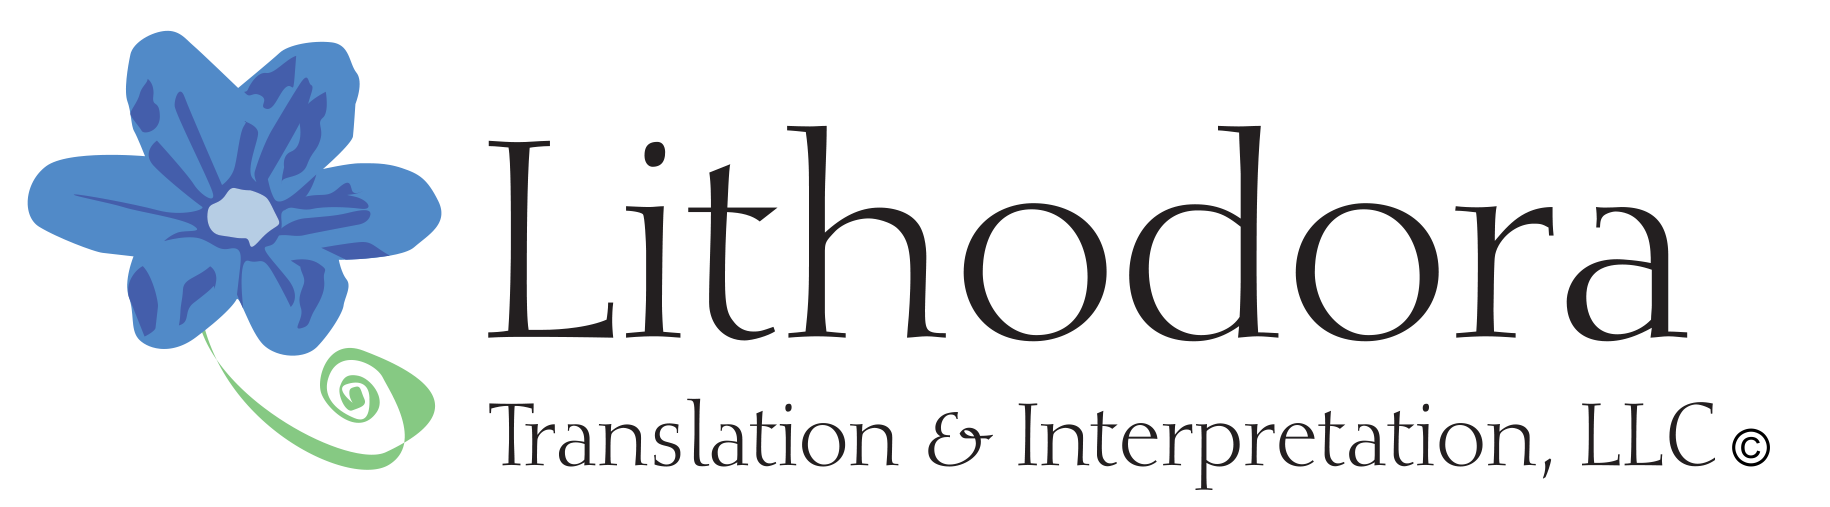 Lithodora Translation & Interpretation, LLC 